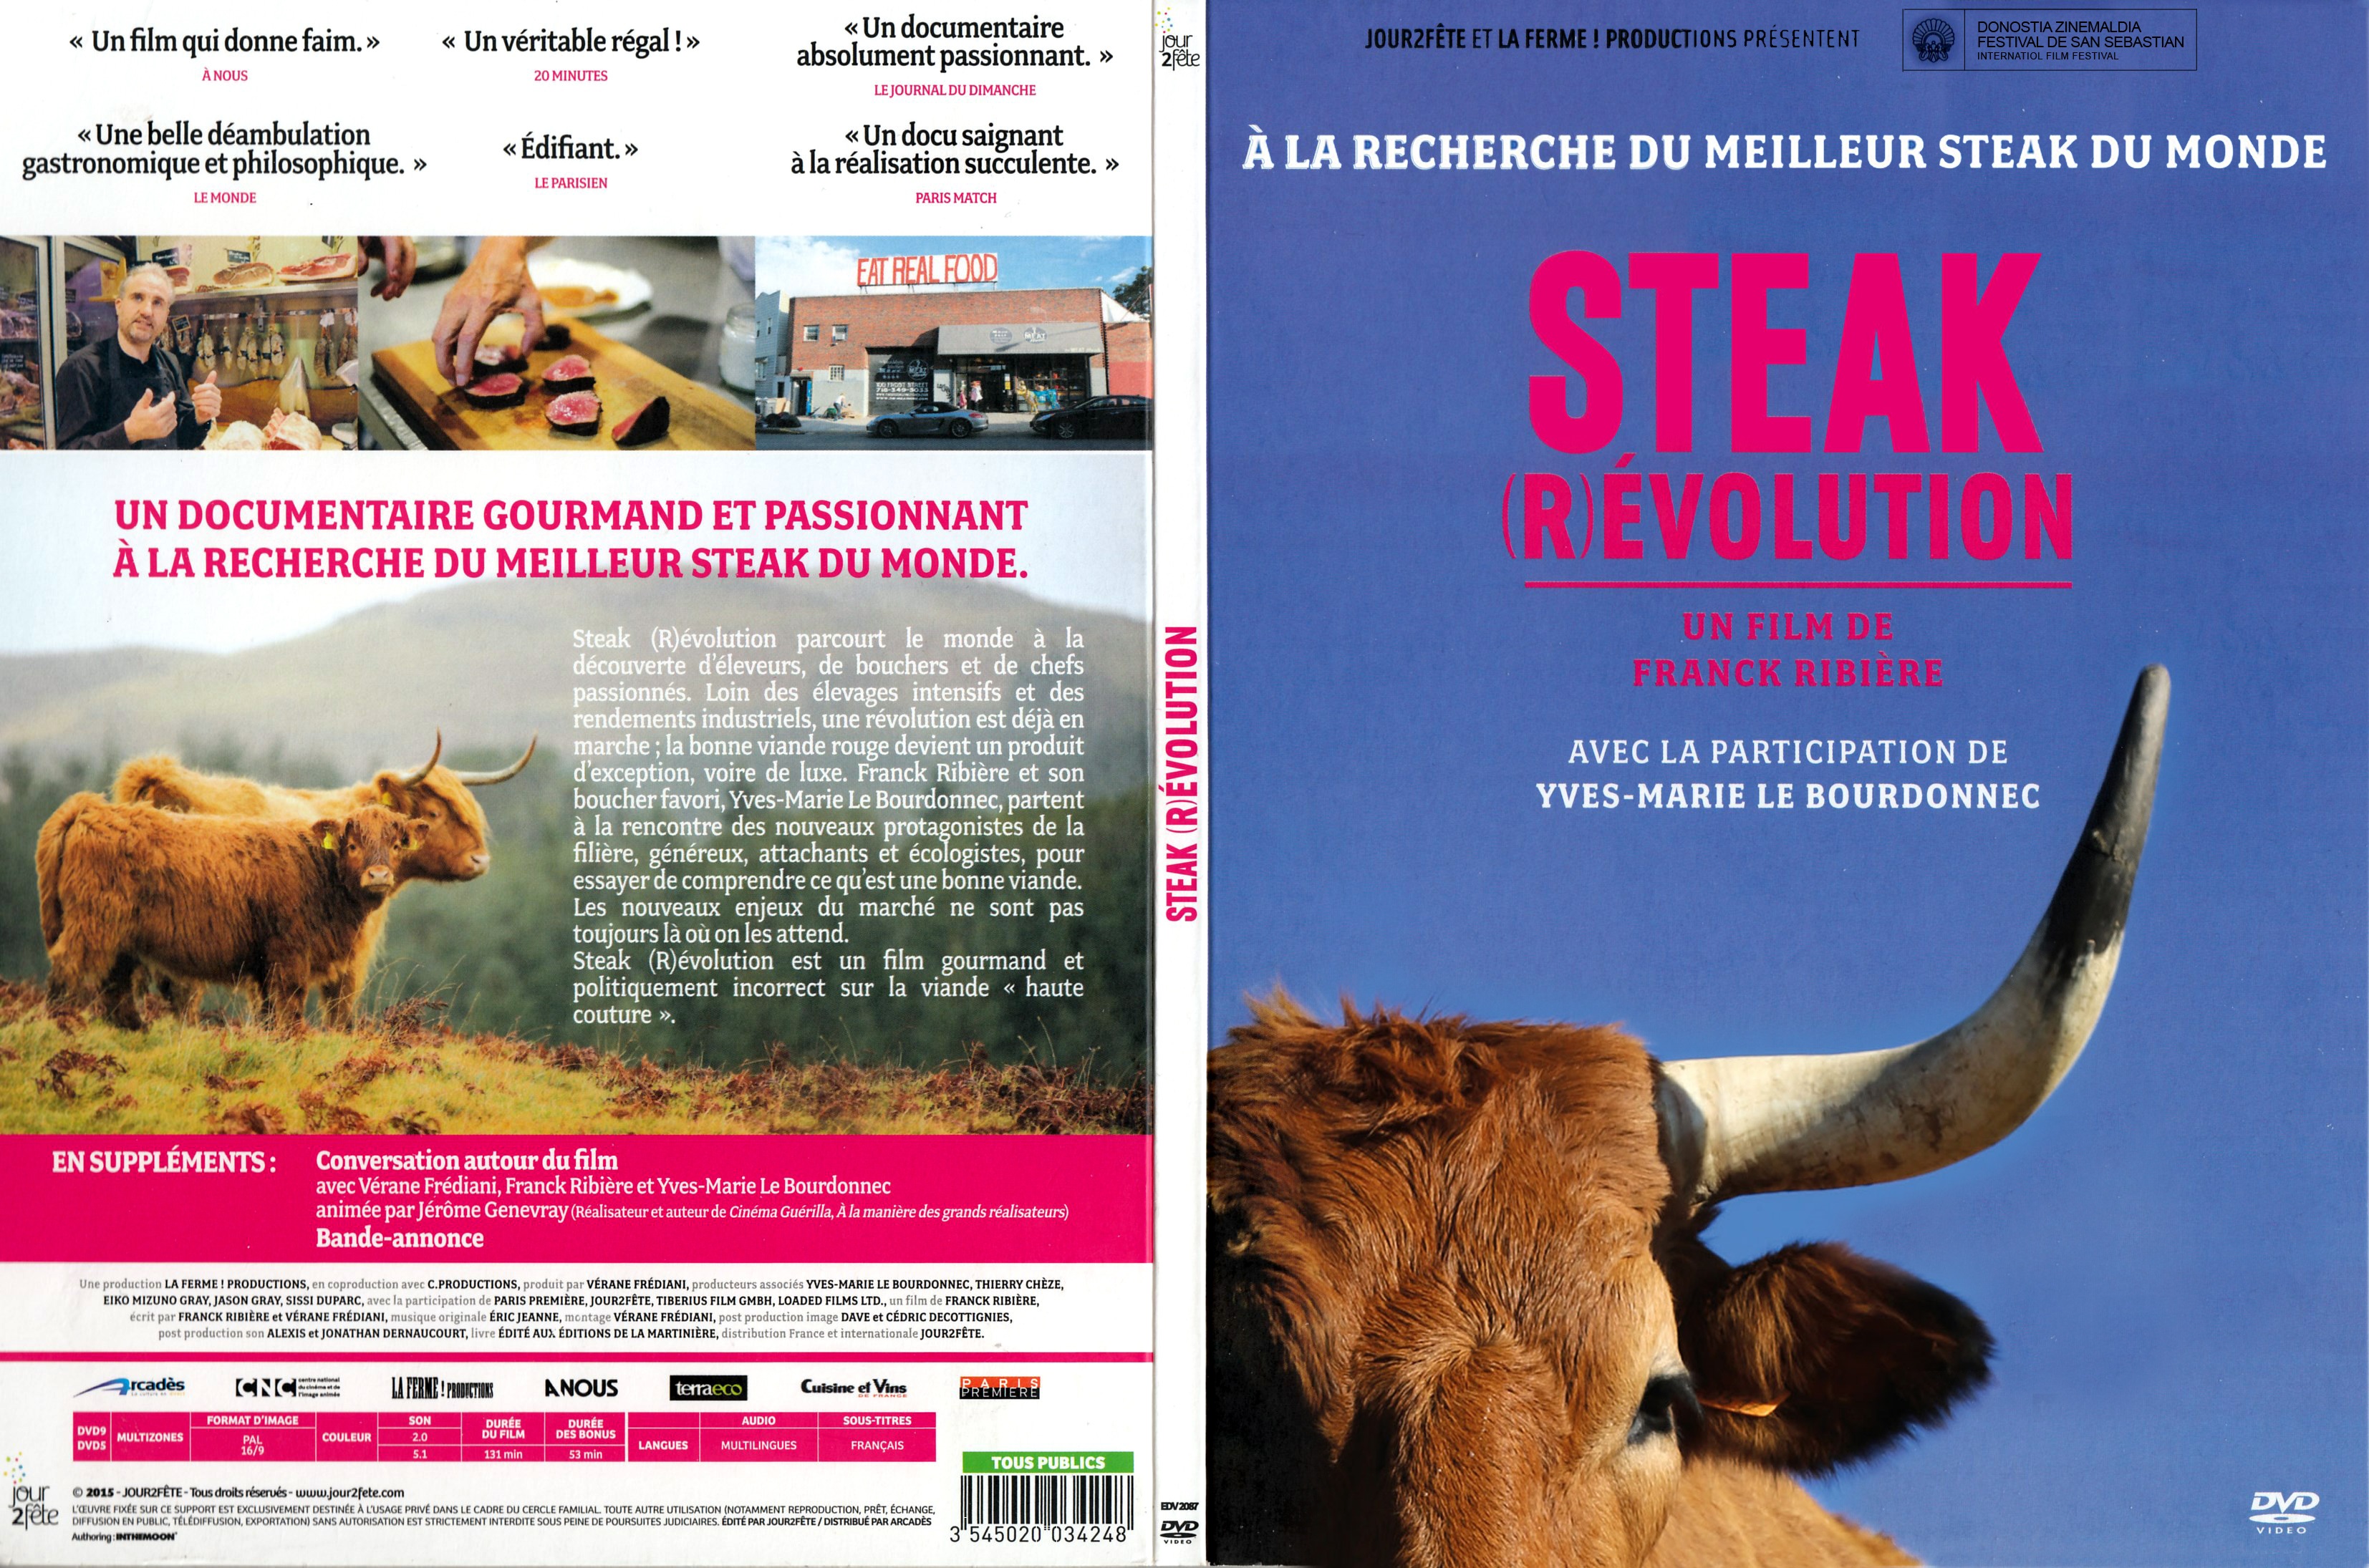 Jaquette DVD Steak Revolution